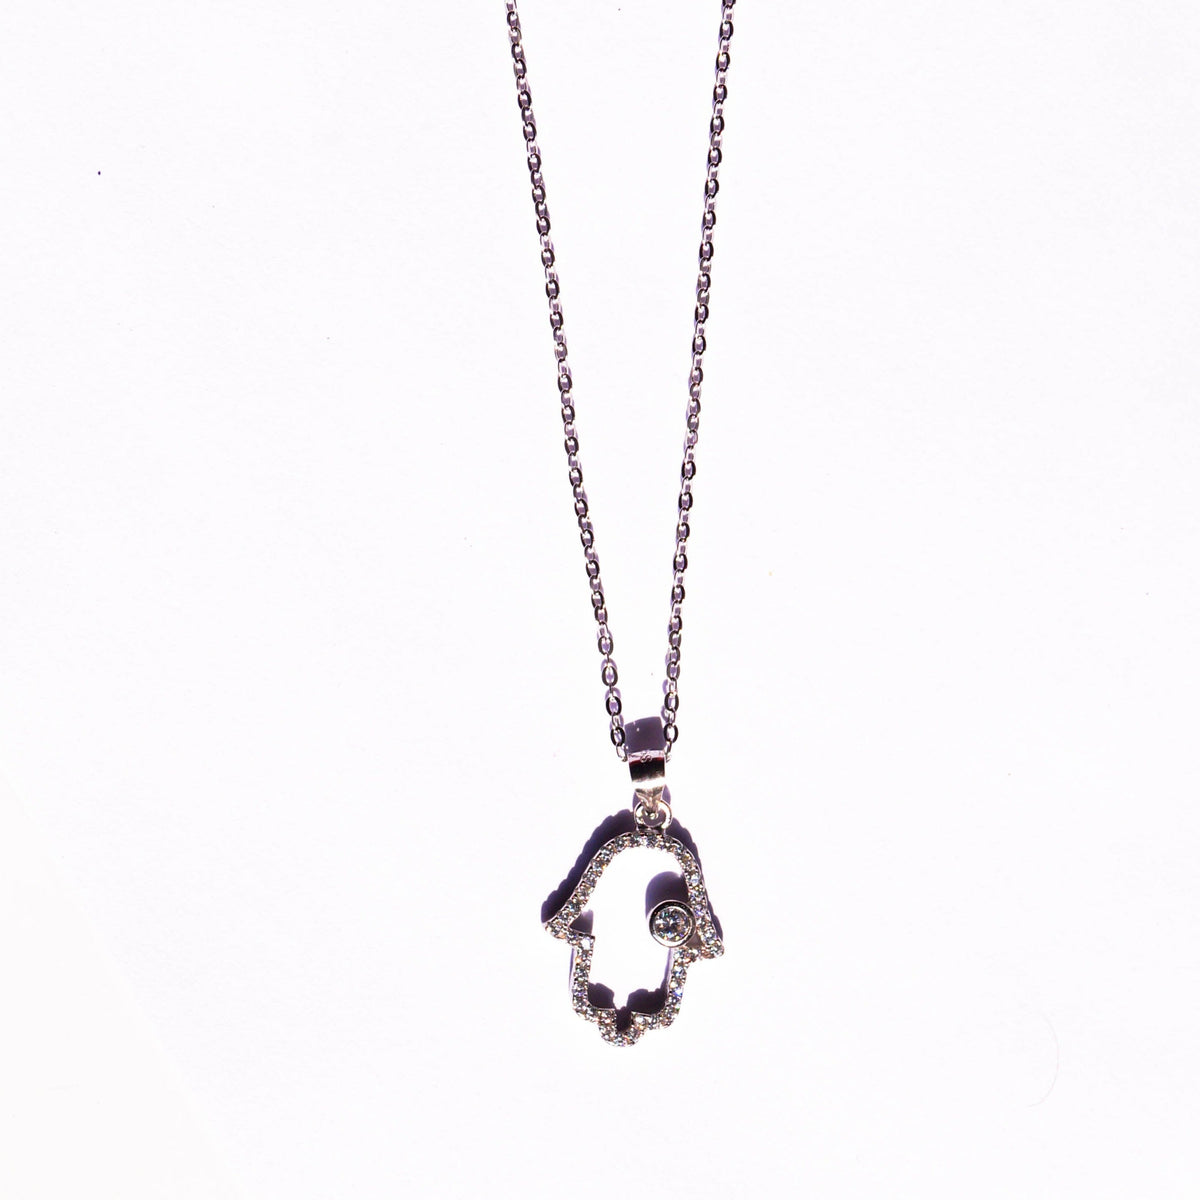 Outlined Studded Hamsa Necklace